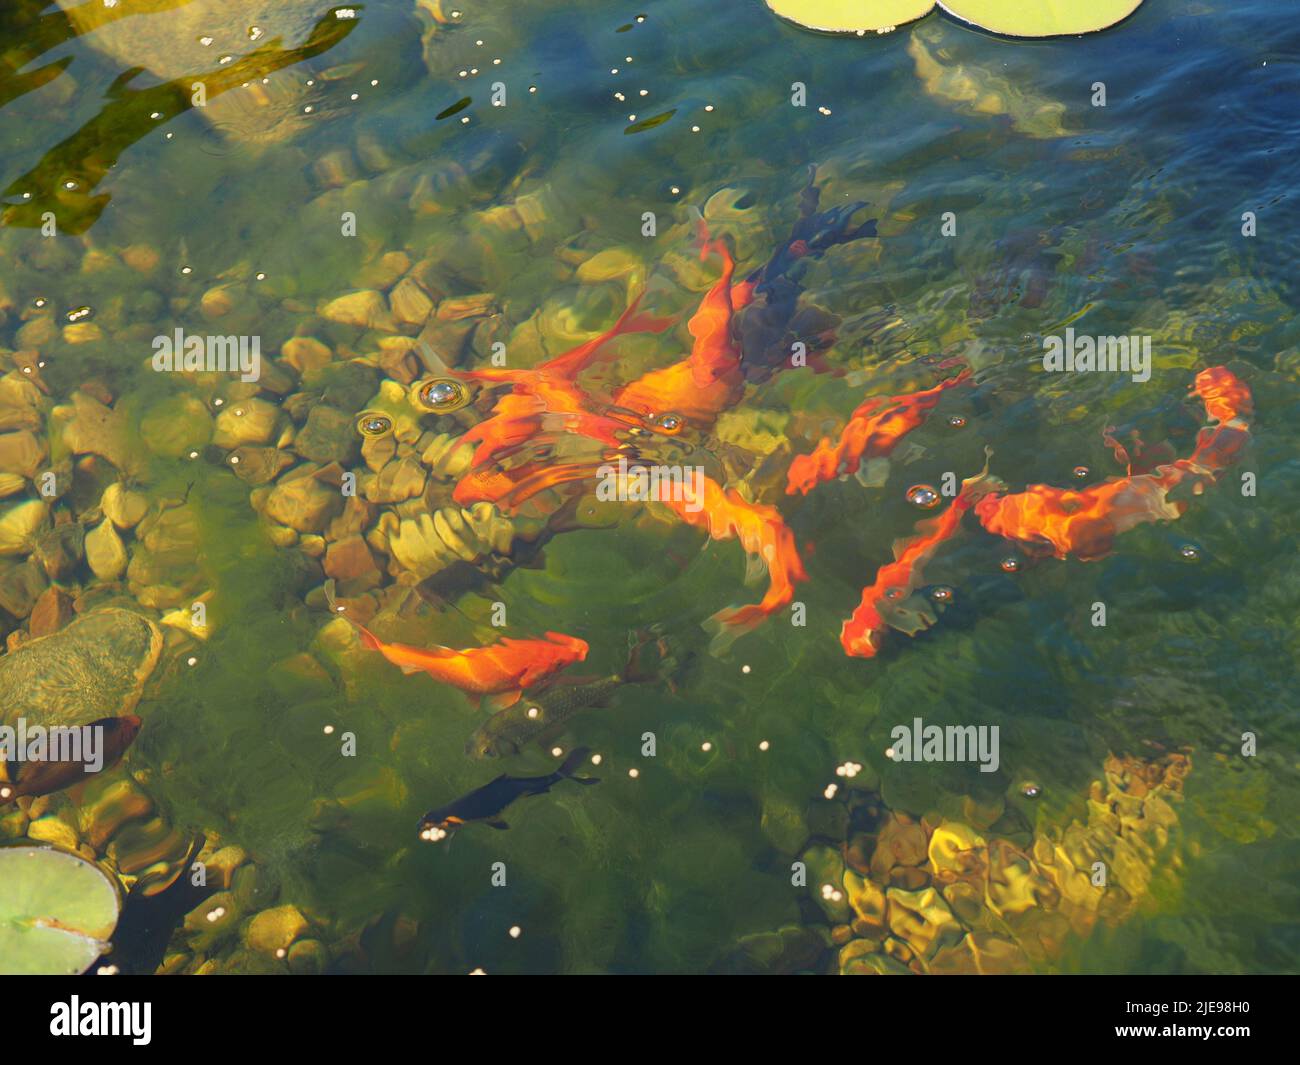 Goldfish feeding frenzy at the family pond. Stock Photo